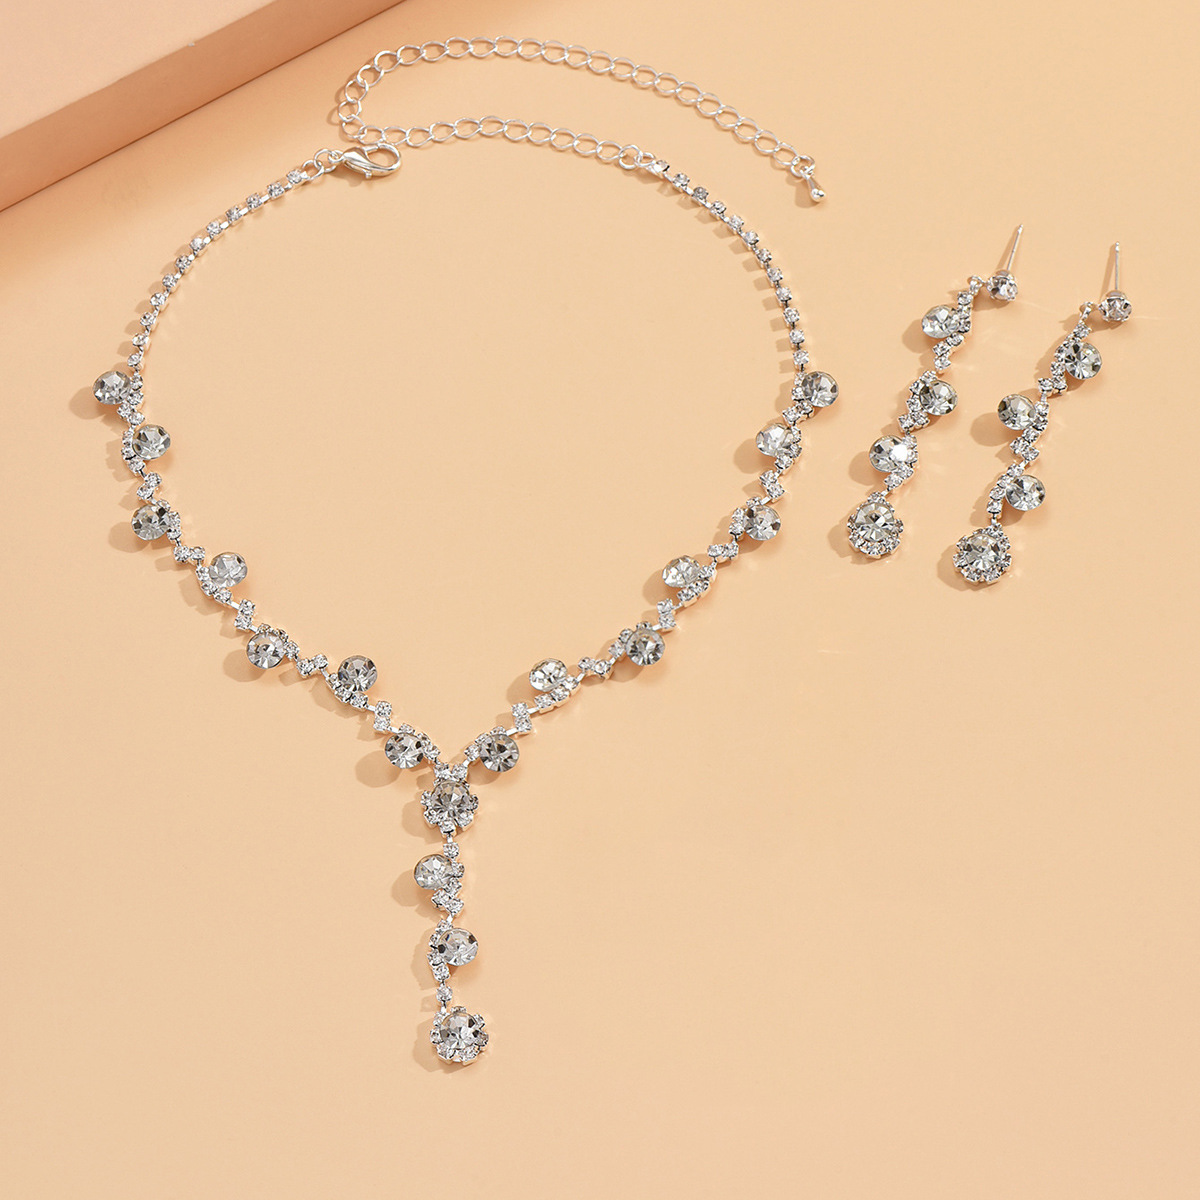 2:869 Silver necklace earrings 2-piece set